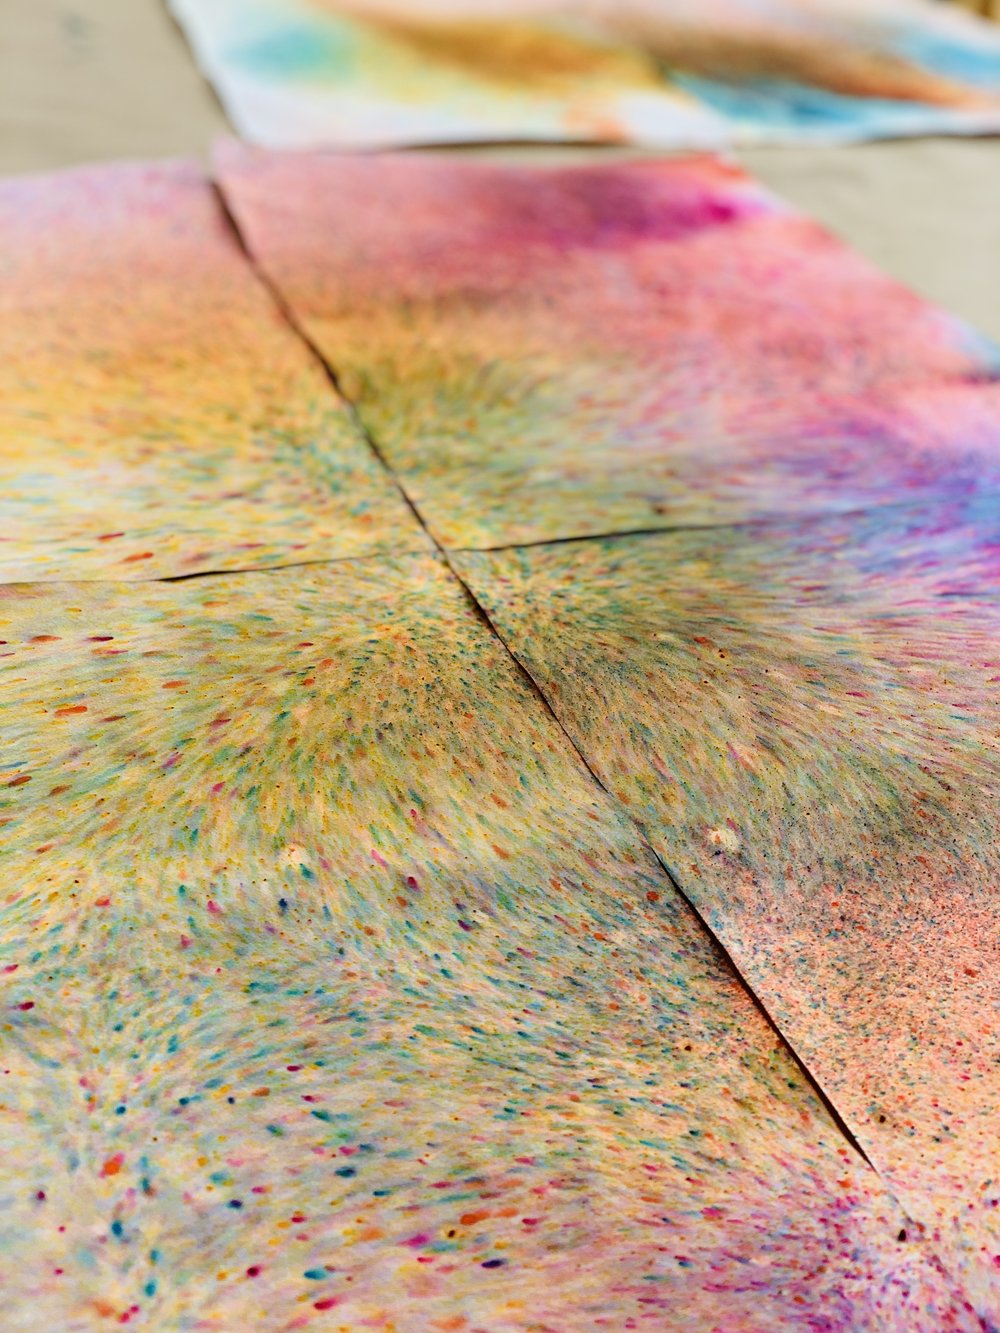  Three photographs of Marisa Morán Jahn’s vibrant hand-dyed rainbow wallpaper tiles.  